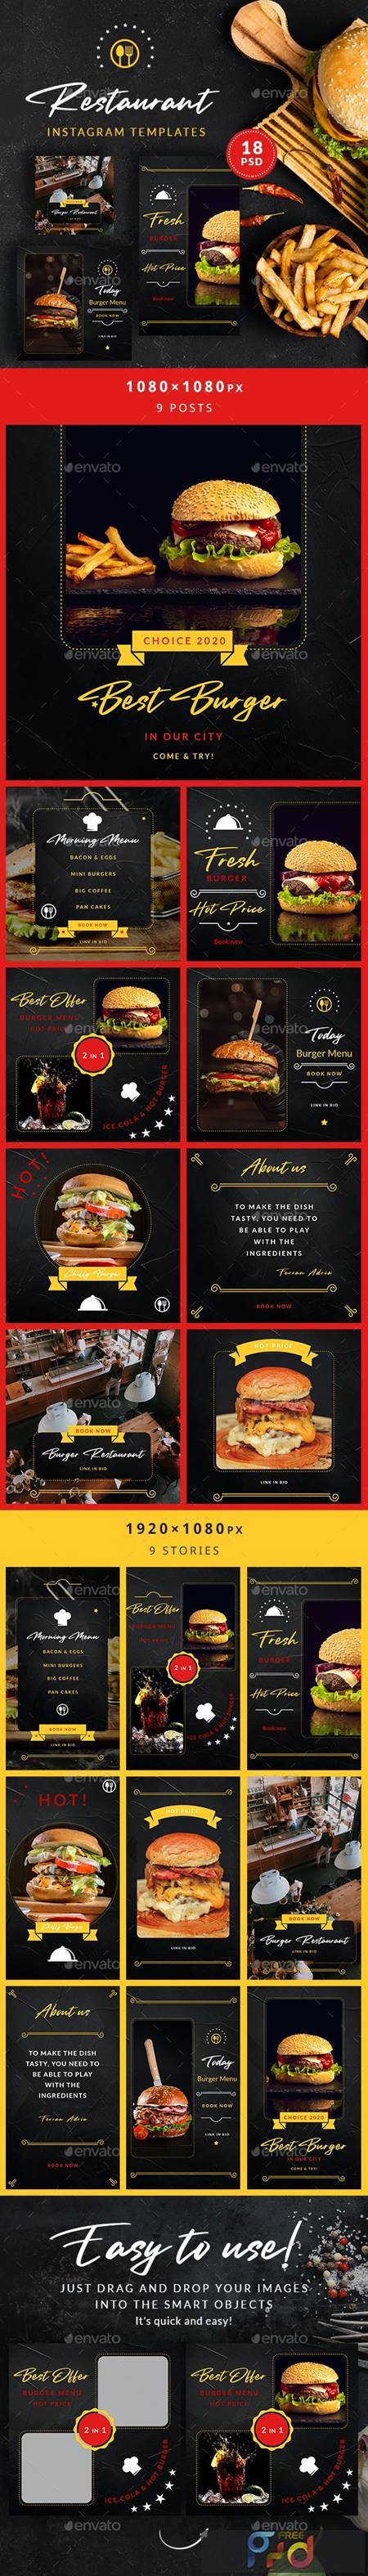 Burger Restaurant Instagram Posts&Stories 26312636 1